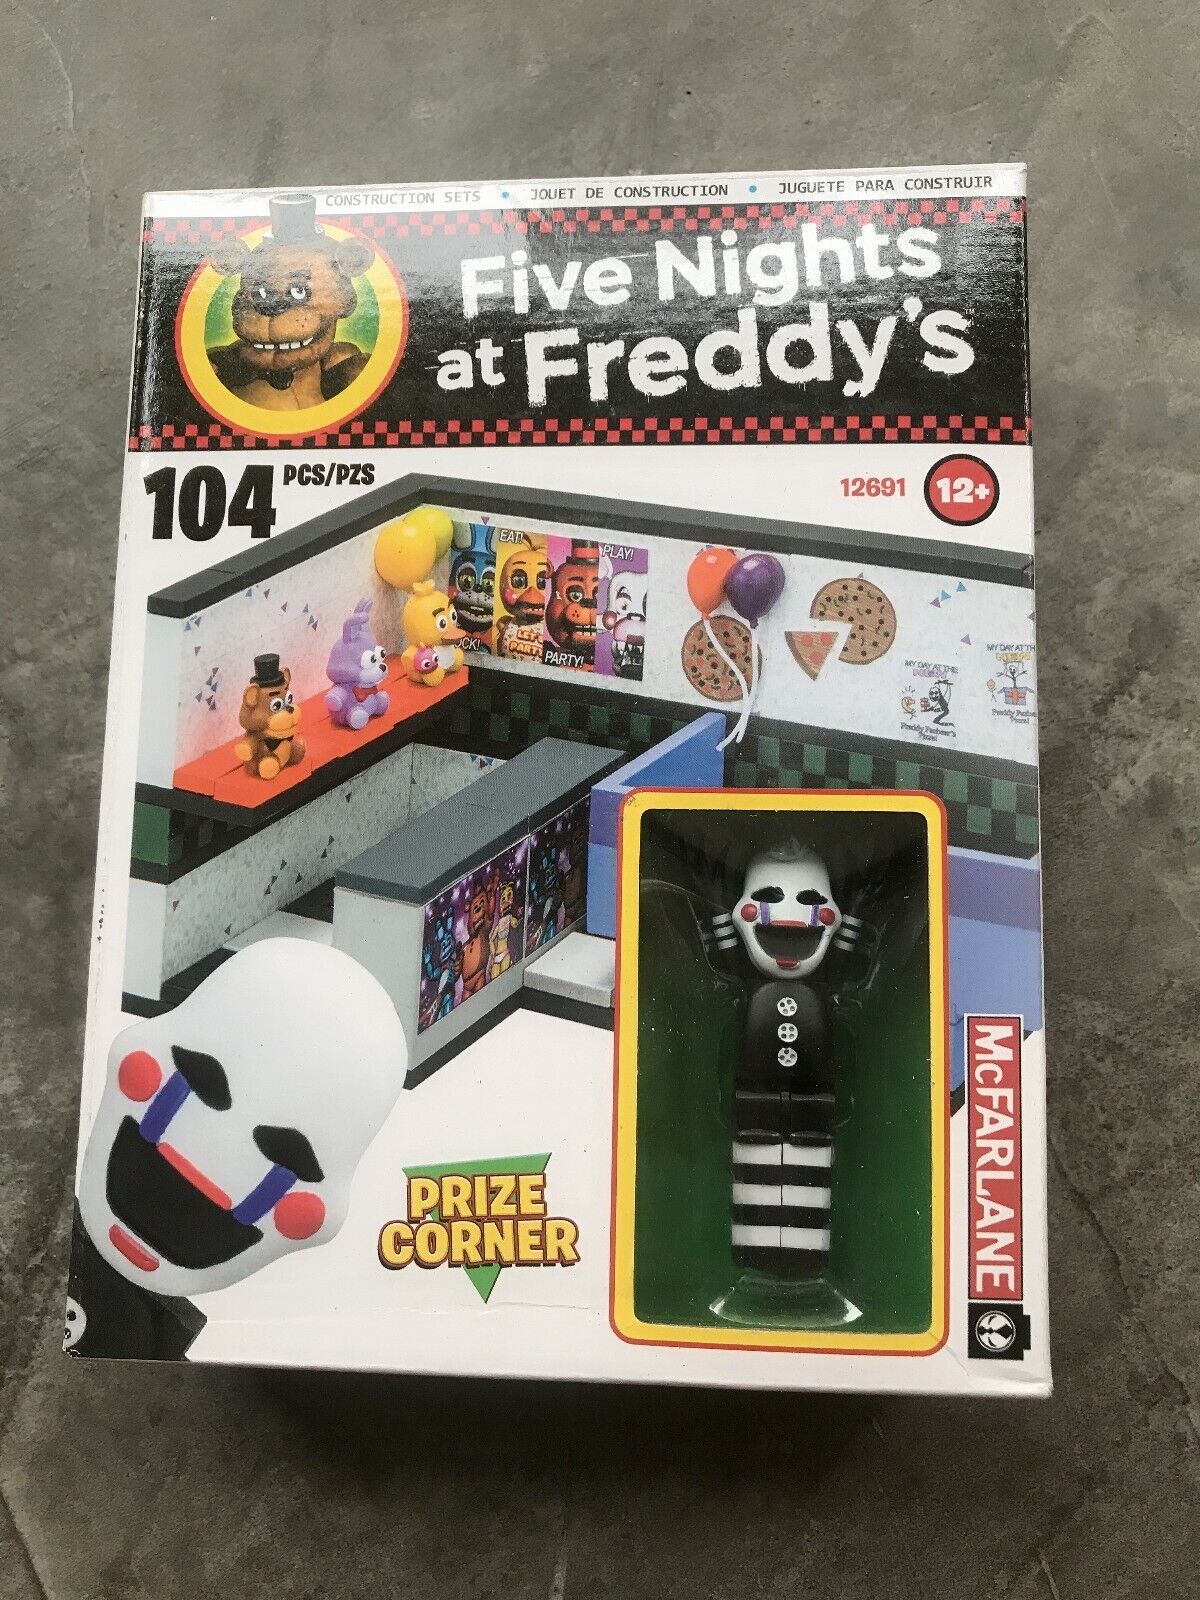 McFarlane Five Nights At Freddys PRIZE CORNER 104 pc Construction Set 12691  | eBay